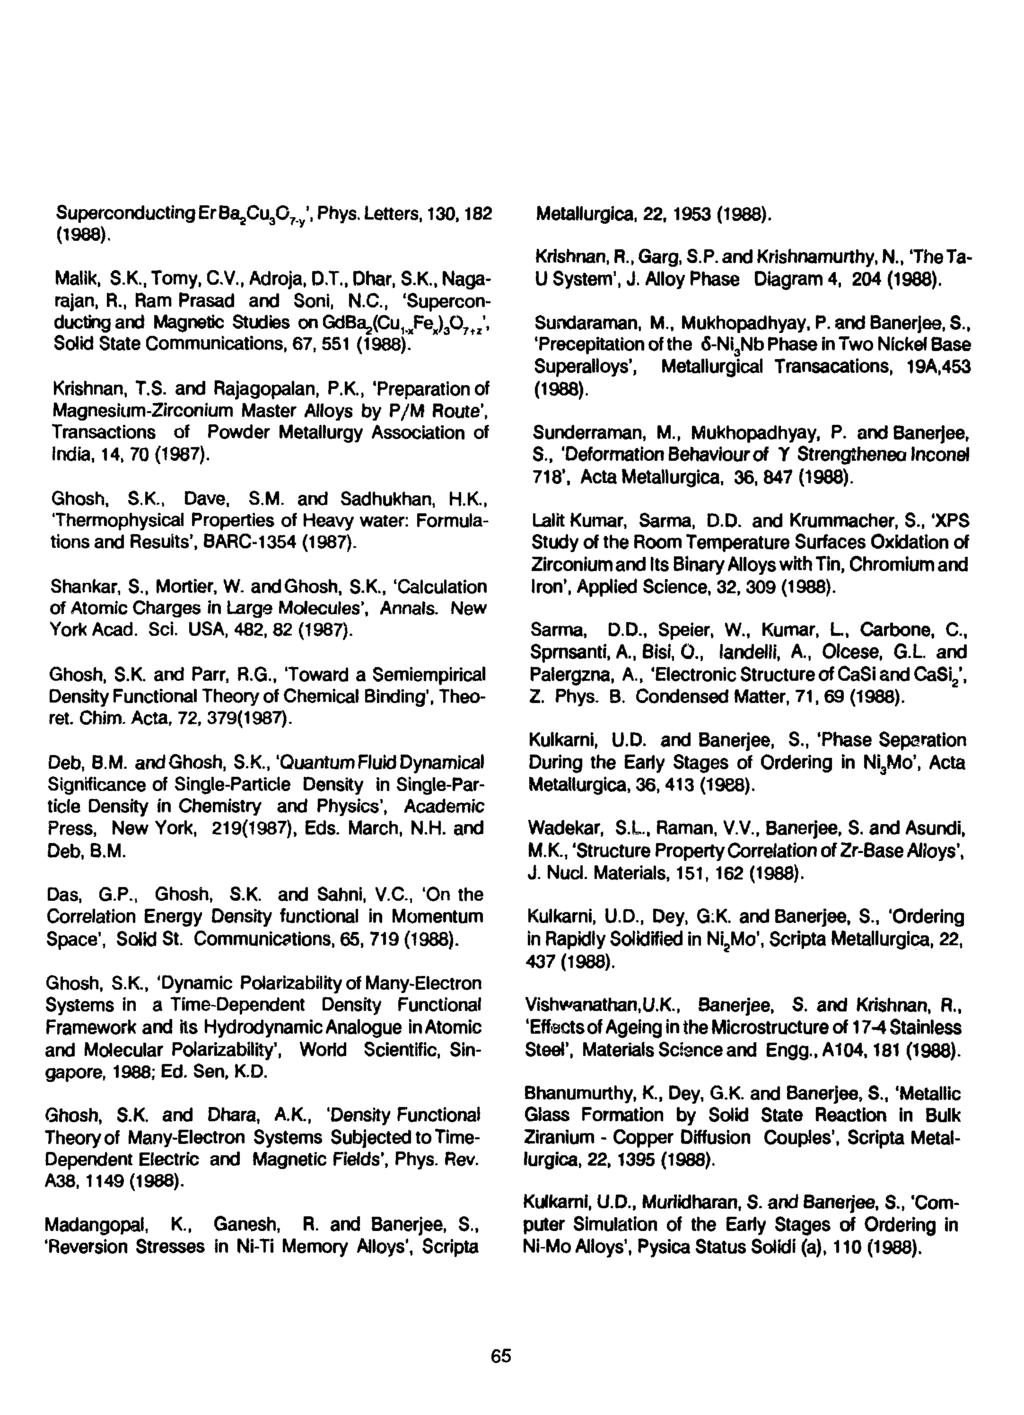 Superconducting ErBa 8 Cu 3 0 7 ' Phys. Letters, 130,182 Malik, S.K., Tomy, C.V., Adroja, D.T., Dhar, S.K., Nagarajan, Ft., Ram Prasad and Soni, N.C., 'Superconducting and Magnetic Studies on GdBa^Cu^FeJgO^', Solid State Communications, 67,551 Krishnan, T.